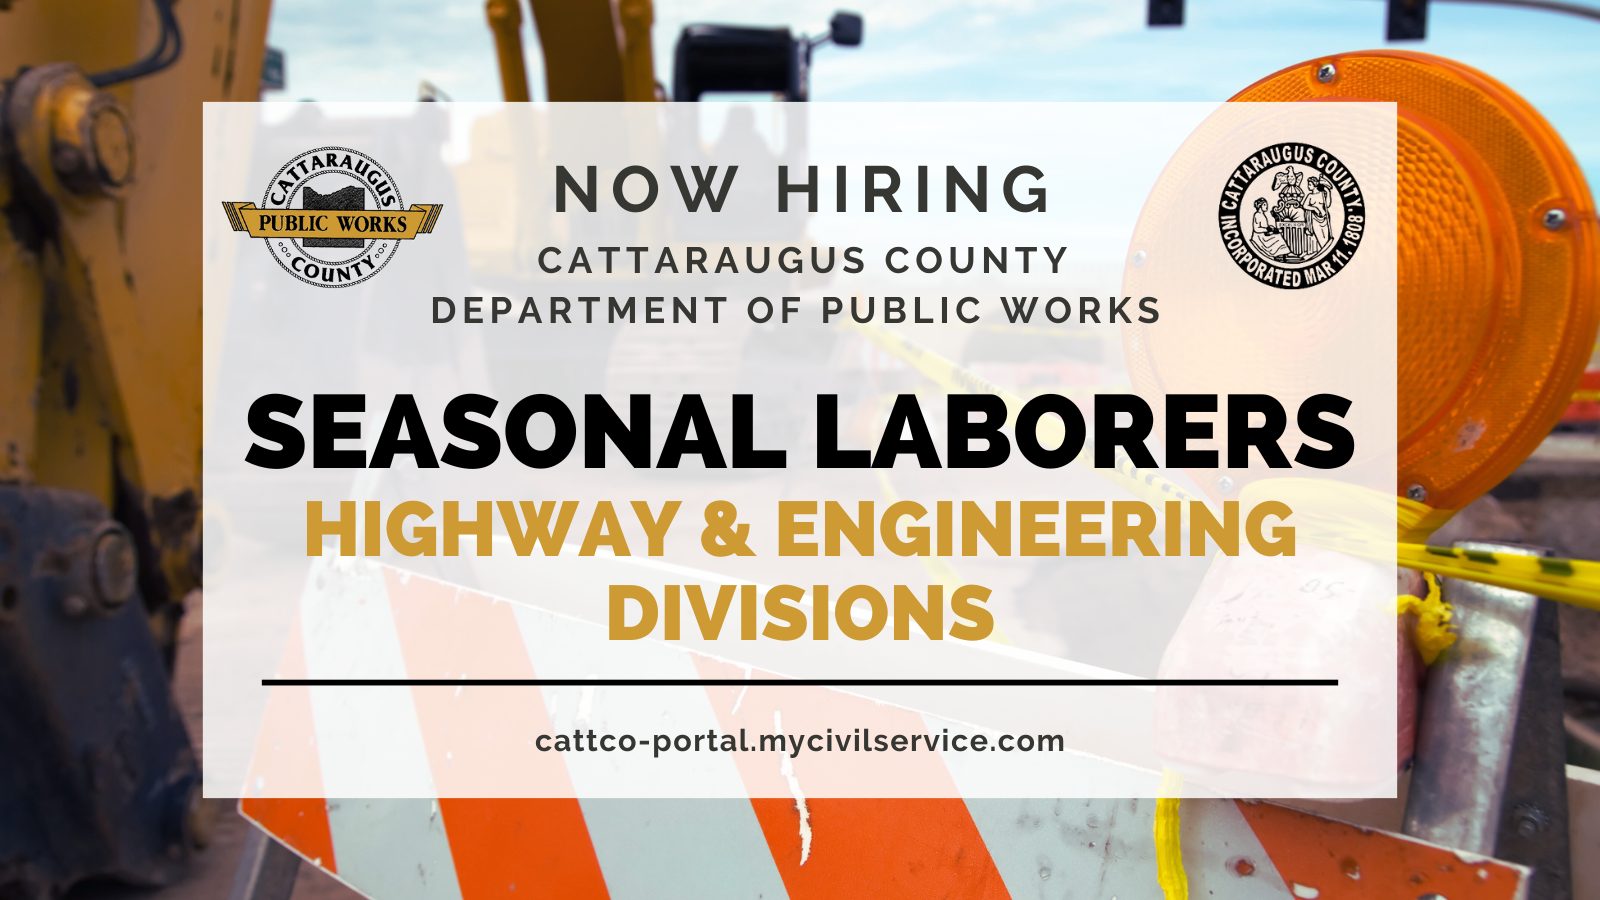 Cattaraugus County Dept. of Public Works is hiring Seasonal Laborers